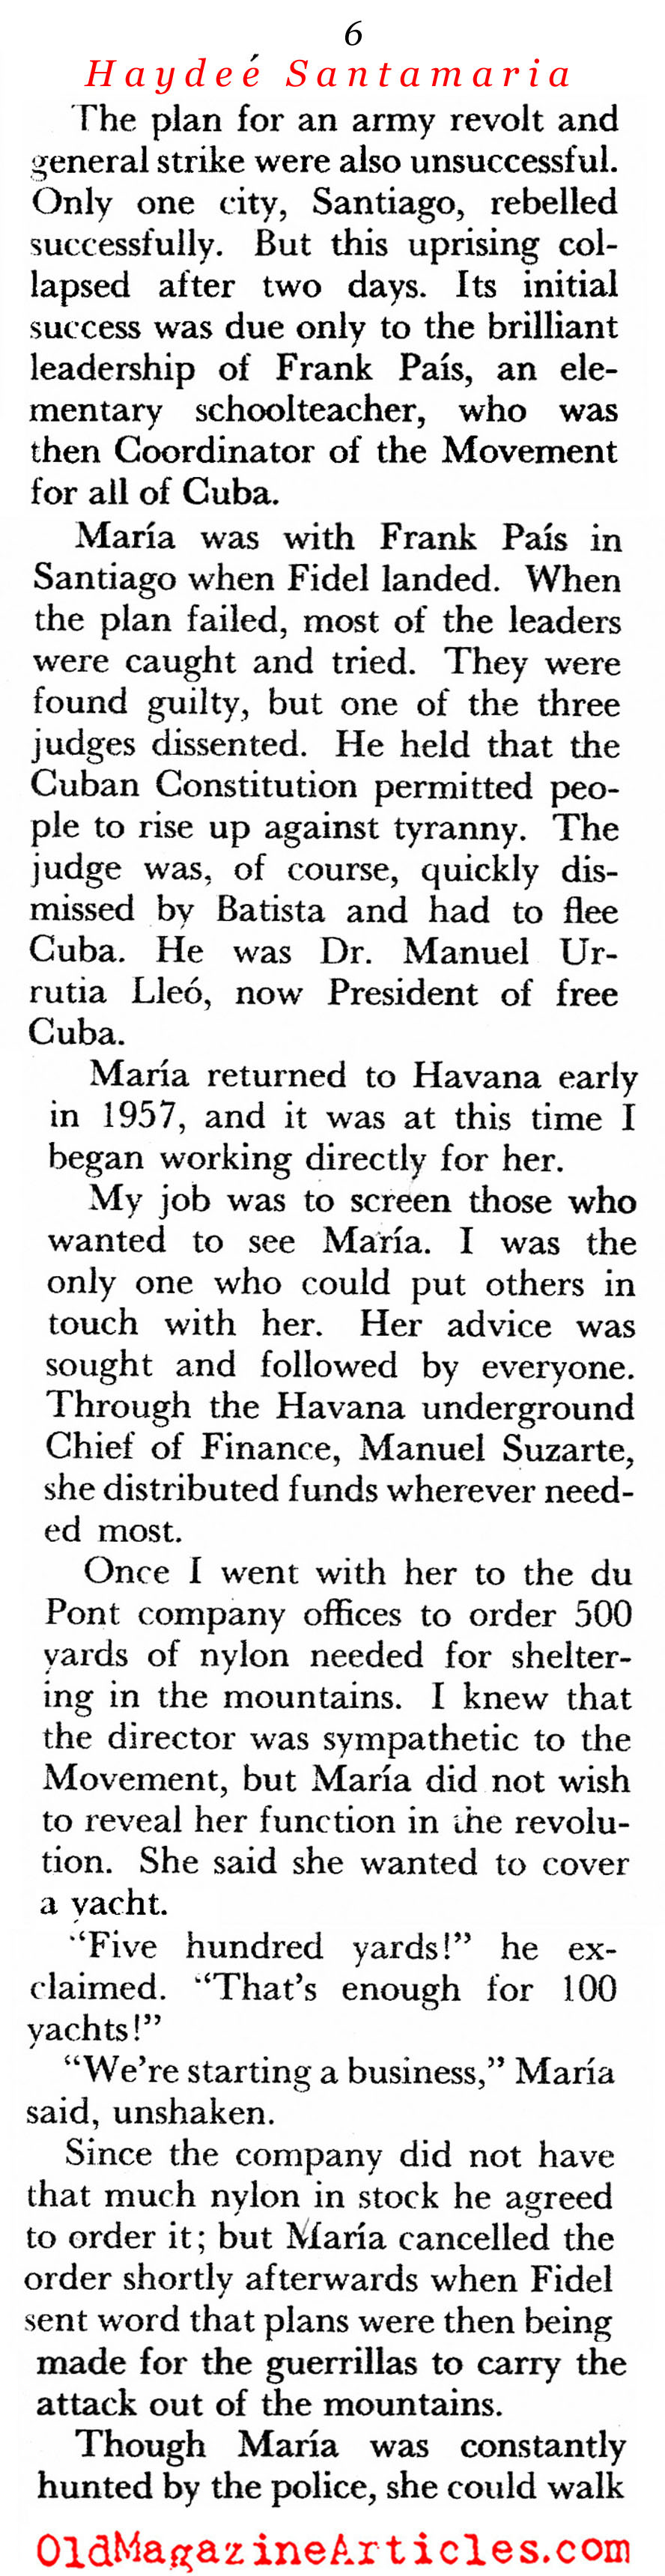 The Woman of the Revolution (Coronet Magazine, 1959)